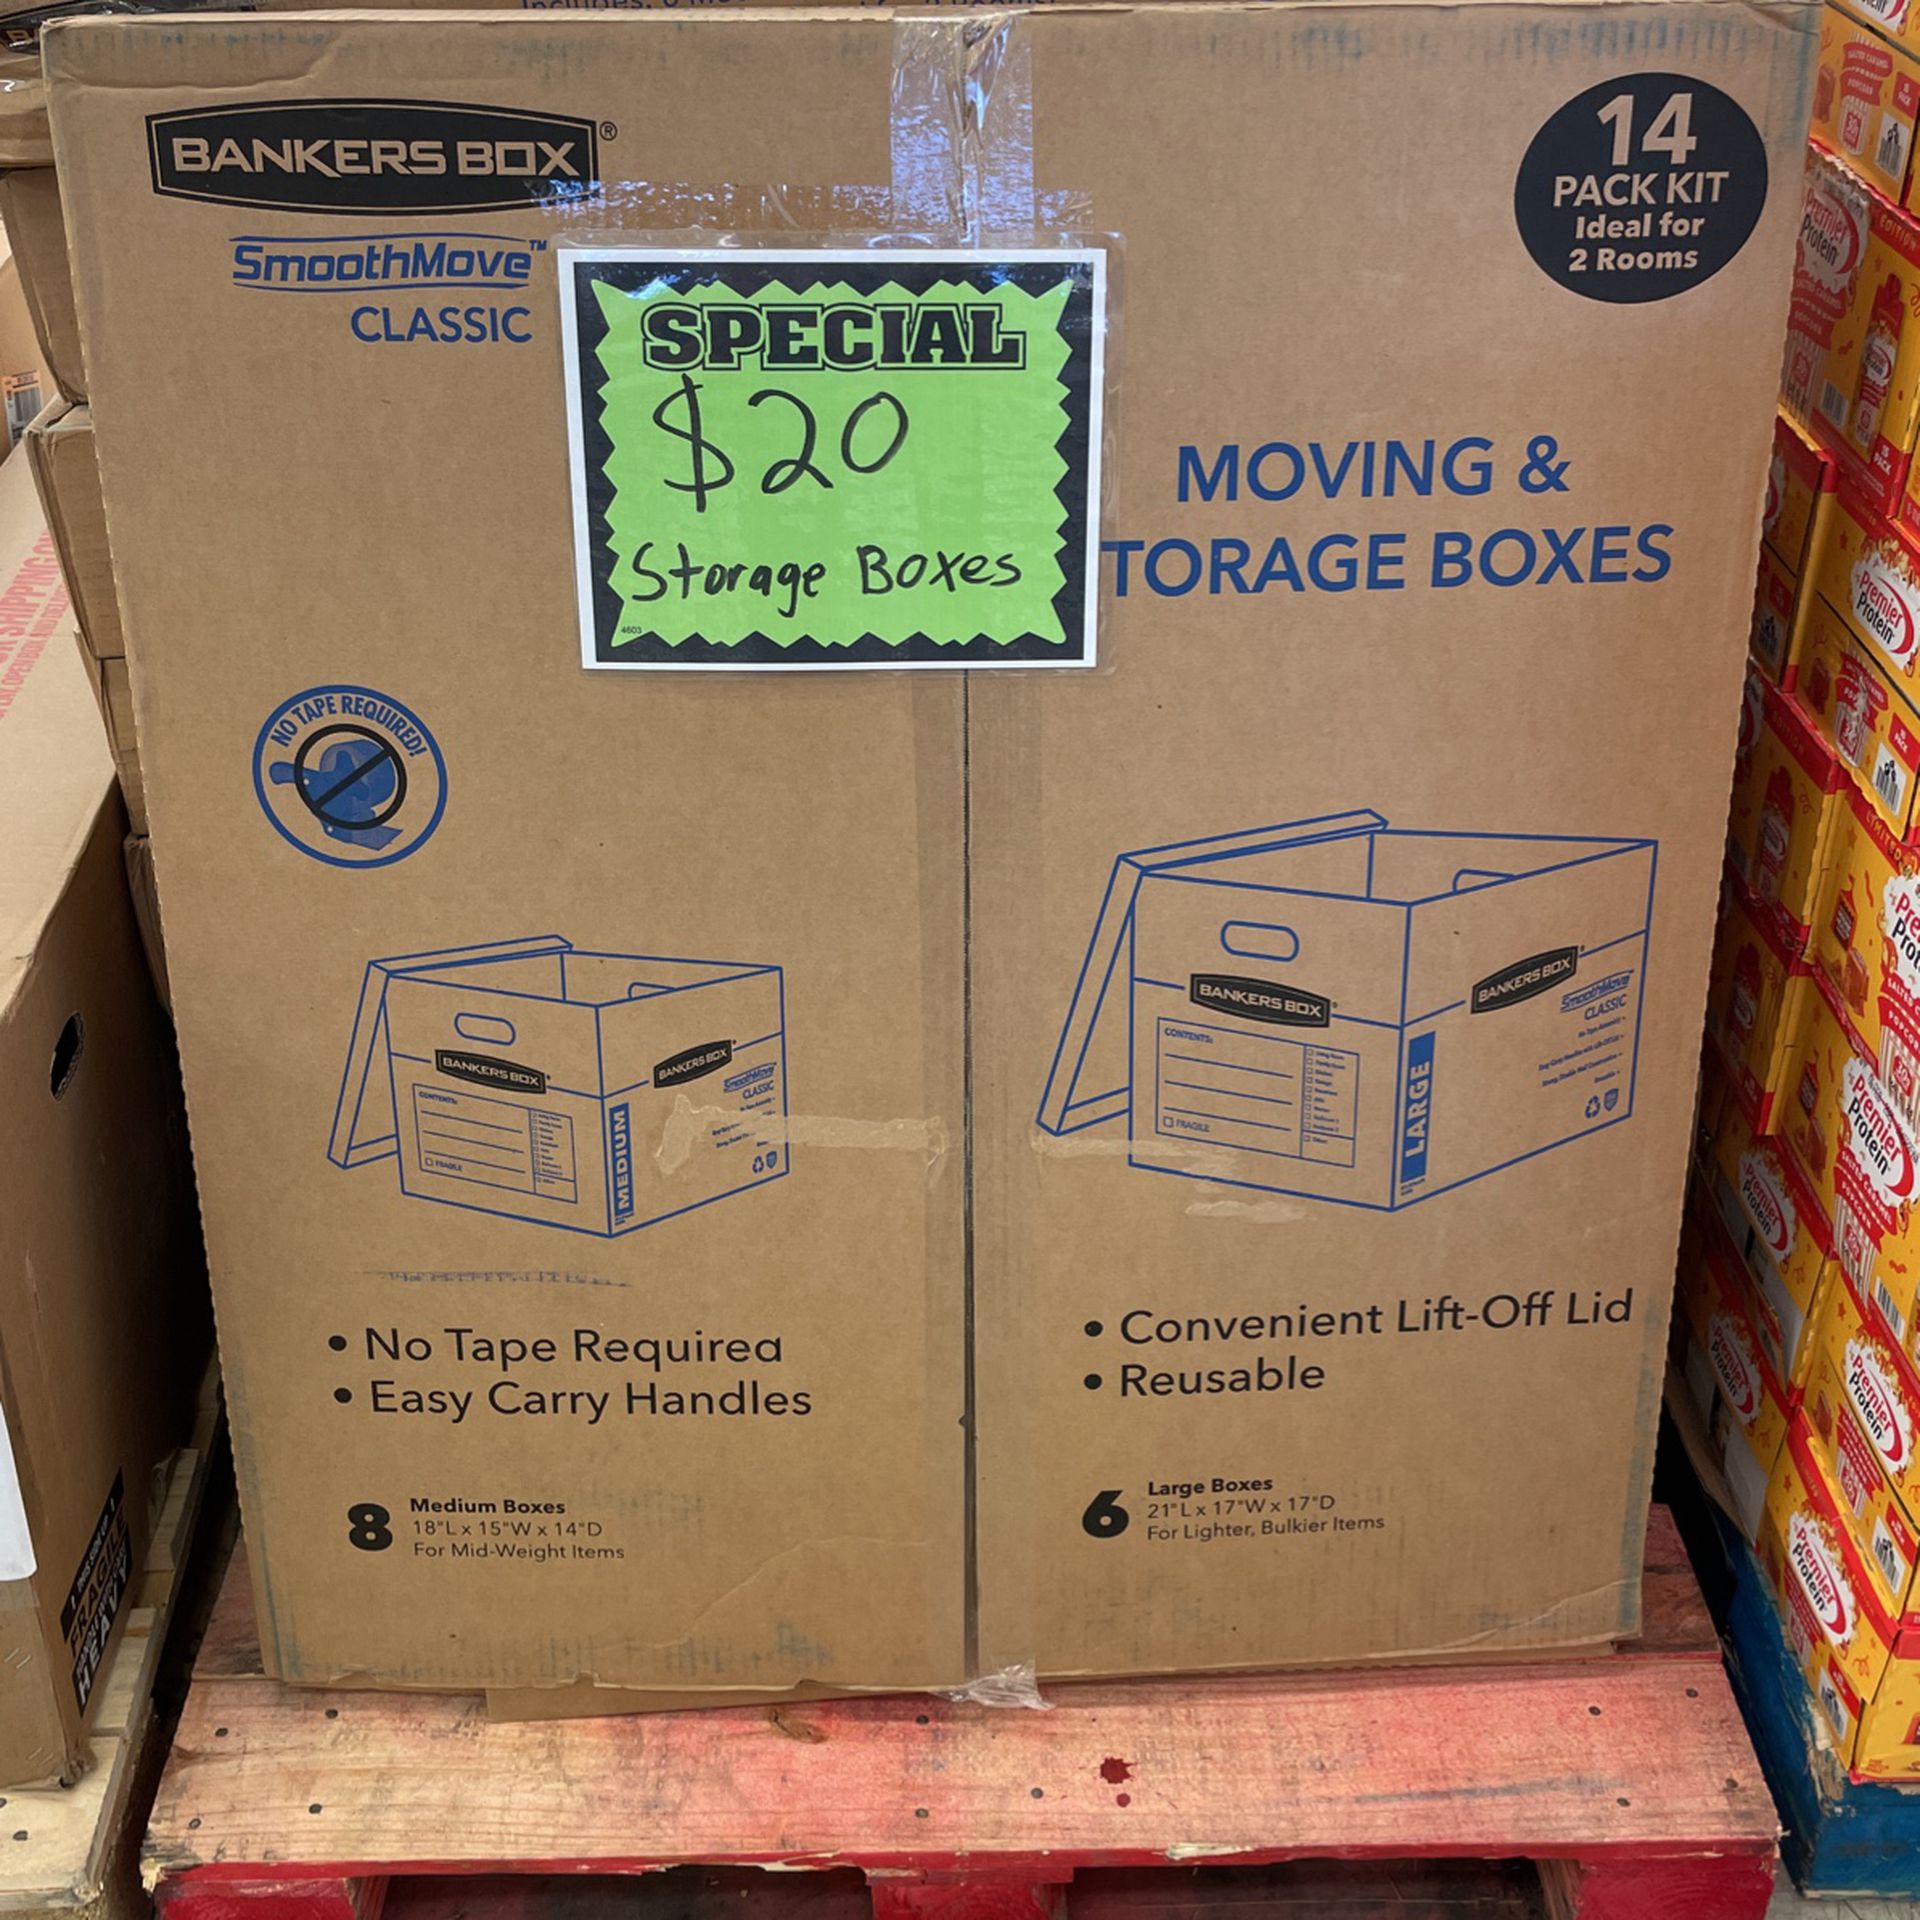 Storage Boxes 14 Pack Kit Large And Medium Boxes